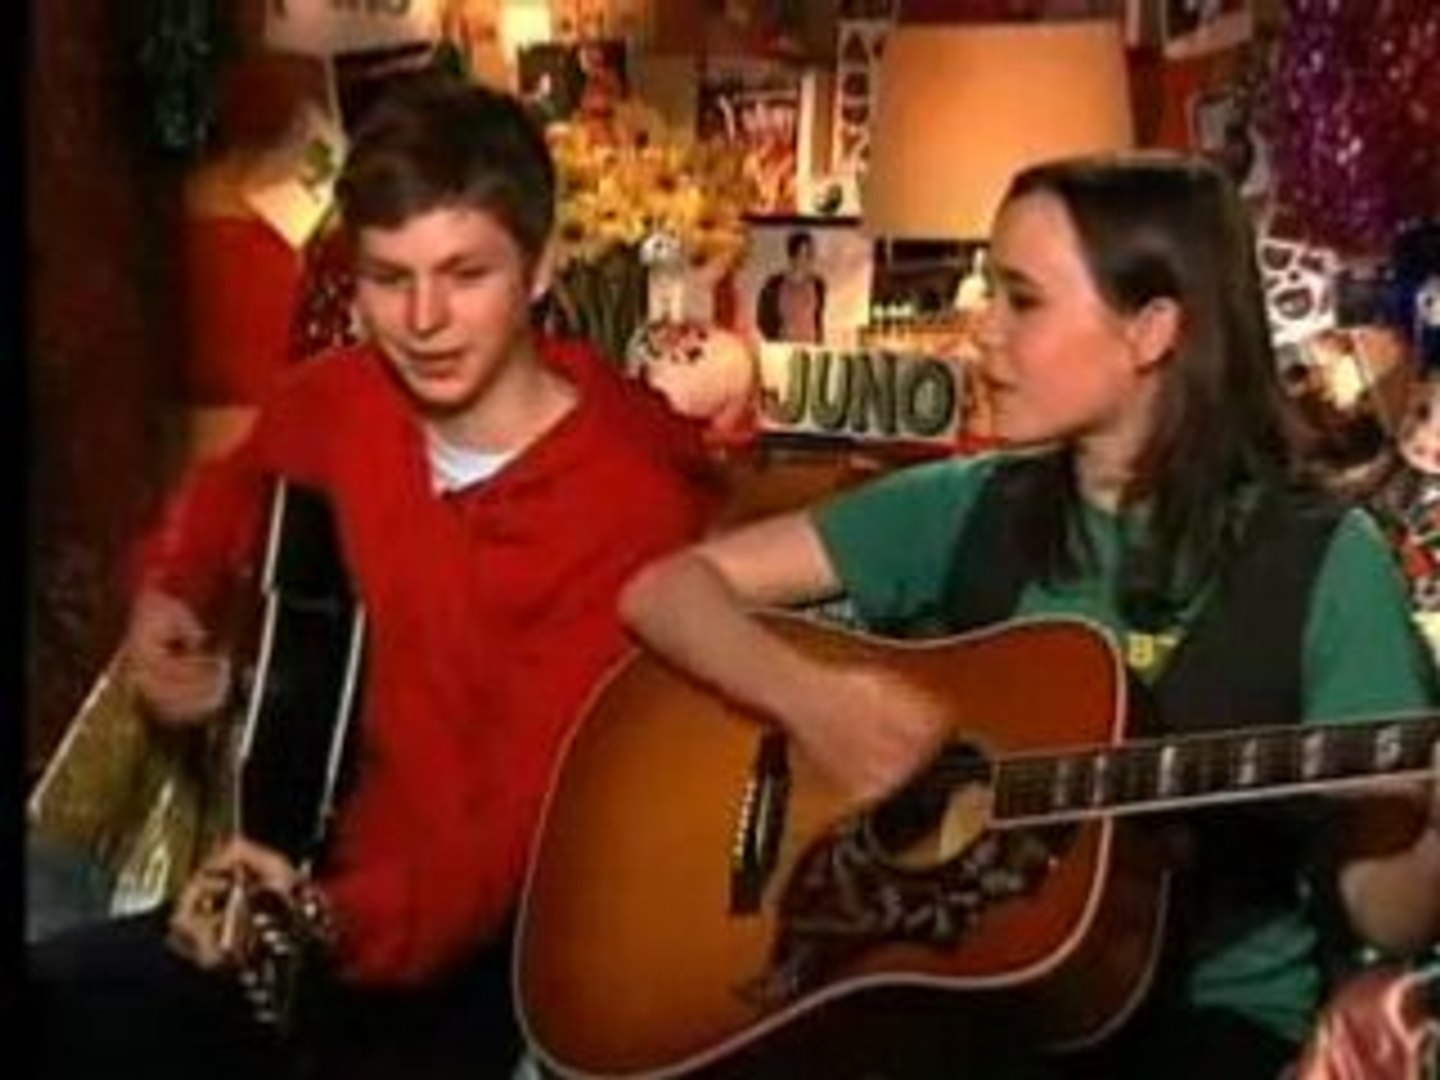 Ellen Page & Michael Cera song about juno - Vidéo Dailymotion